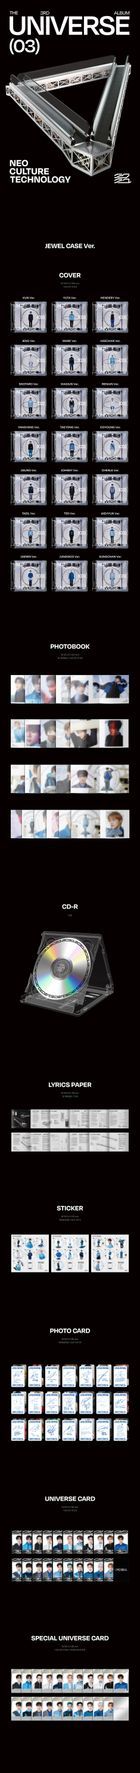 NCT Vol. 3 - Universe (Jewel Case Version) (Ji Sung Version)